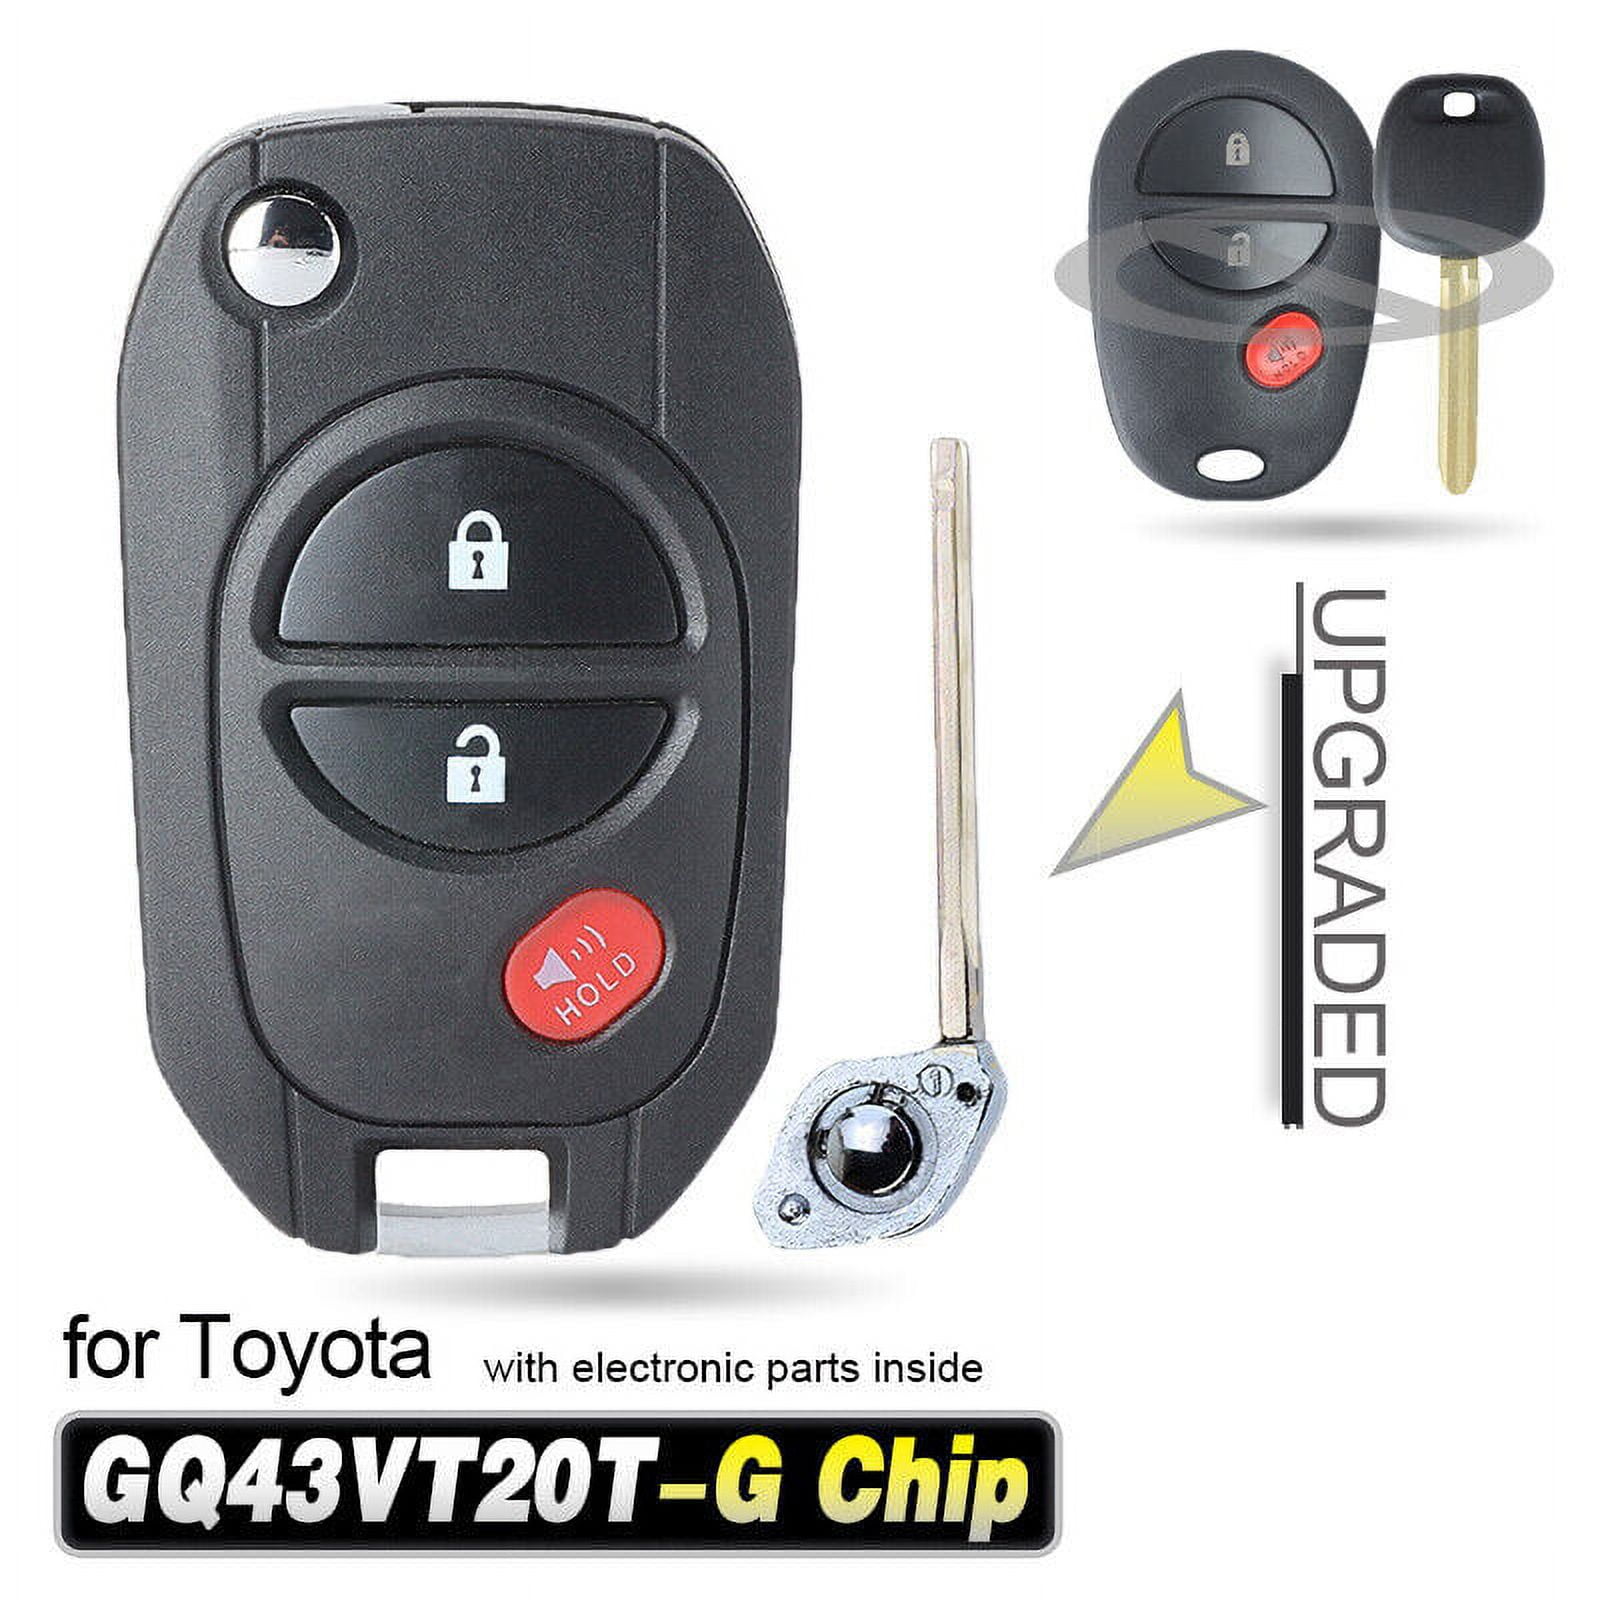 Upgraded Flip Remote Key Fob for Toyota Sienna Highlander Tacoma GQ43VT20T  -G